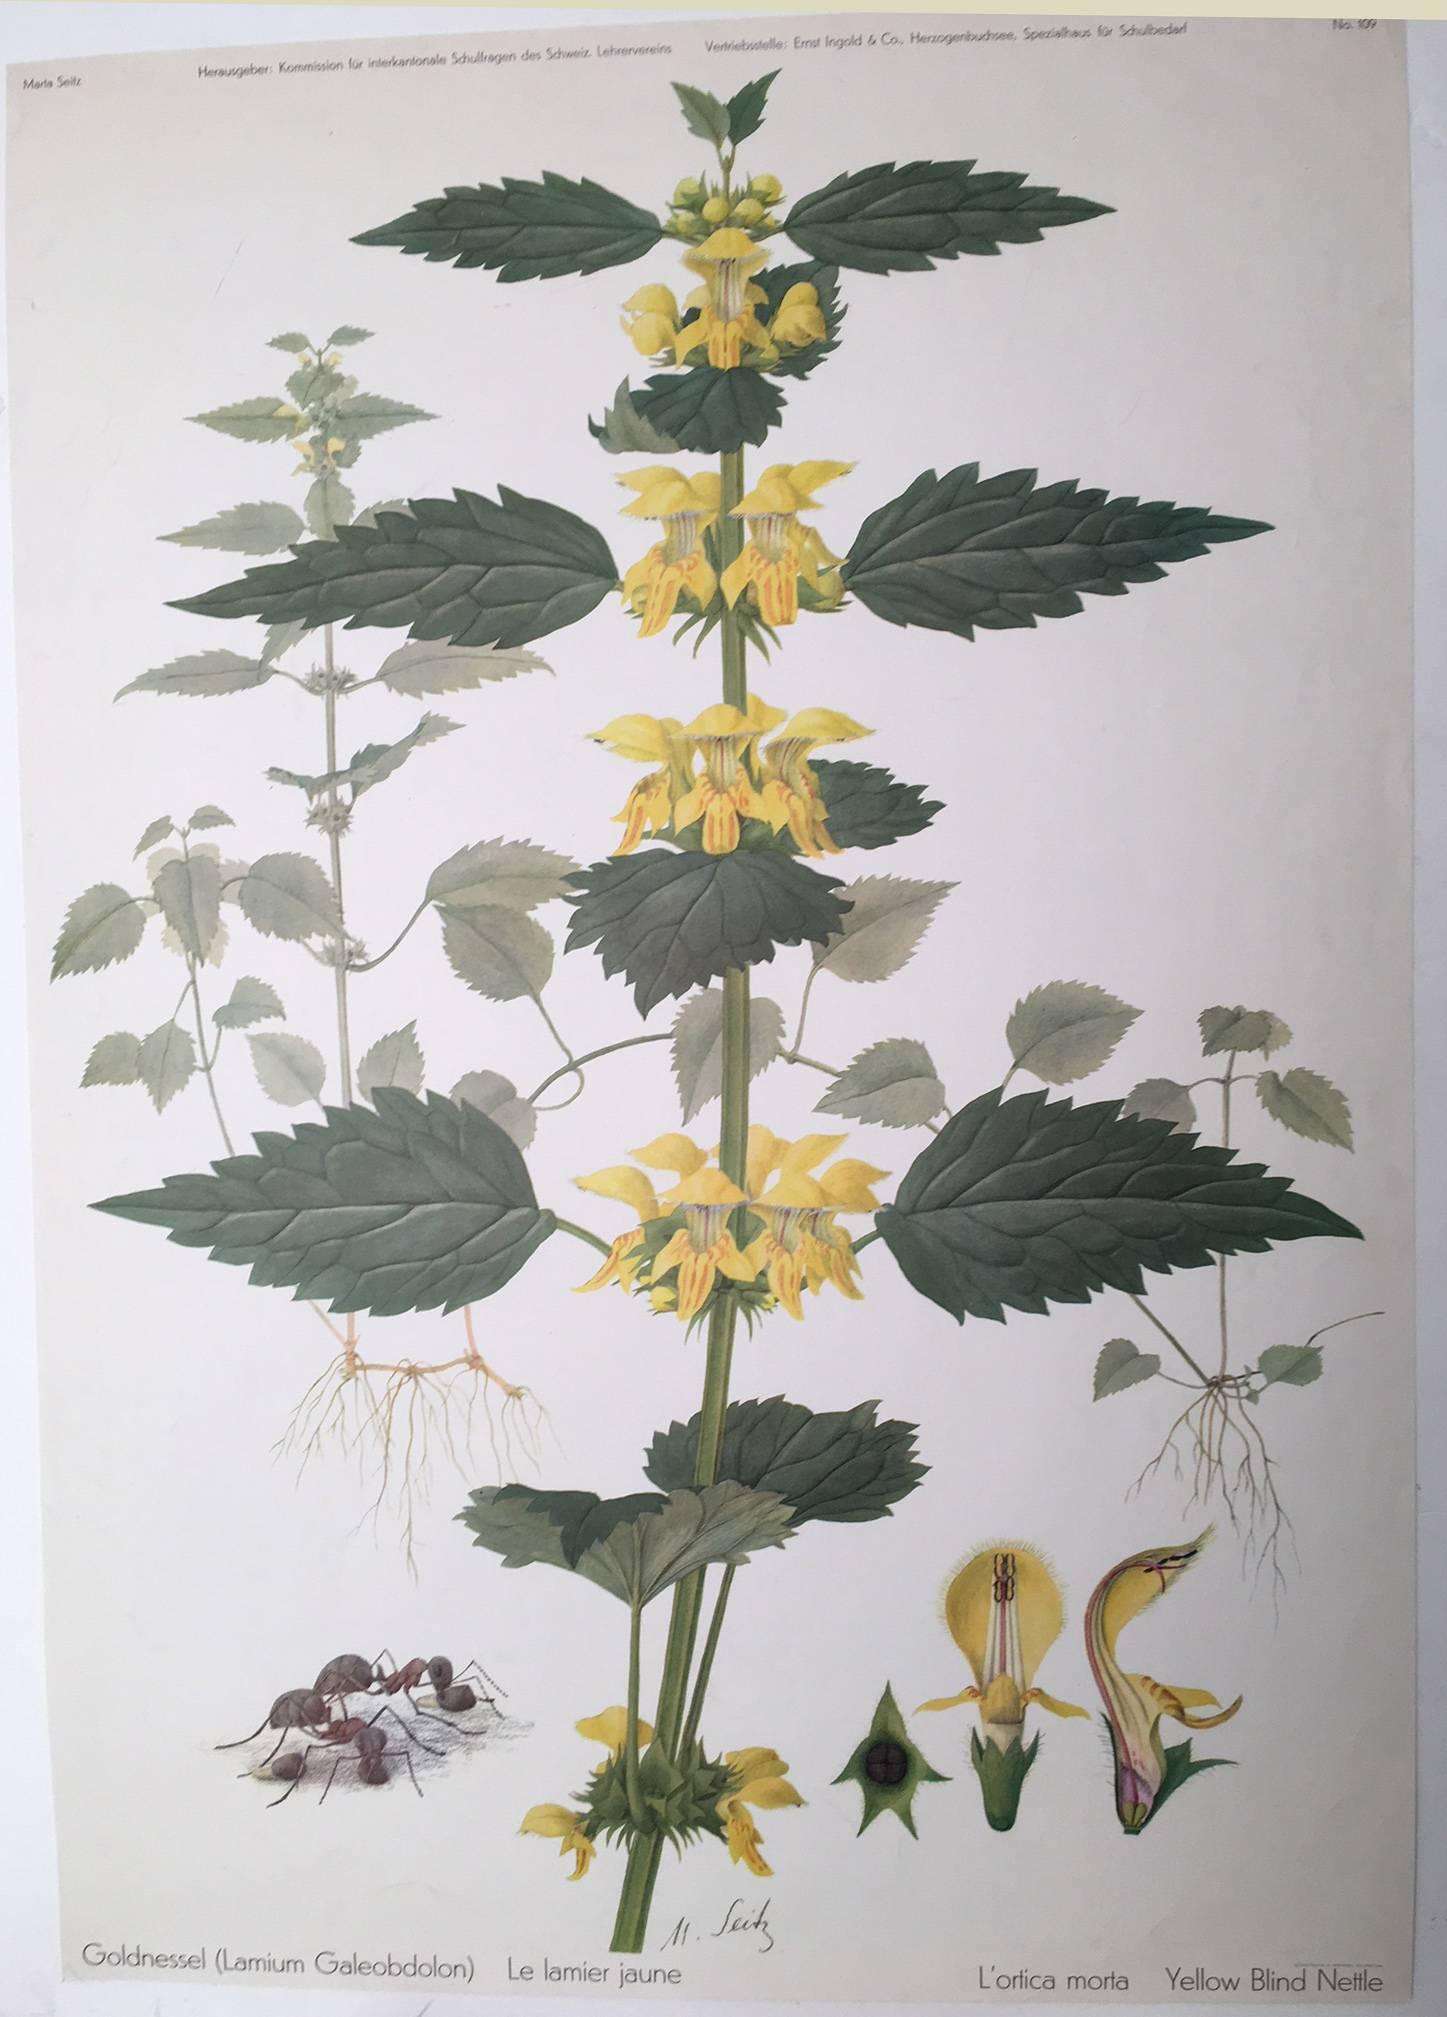 Goldnessel (Lamium Galeobdolon) Le lamier jaune - Print by Marta Seitz